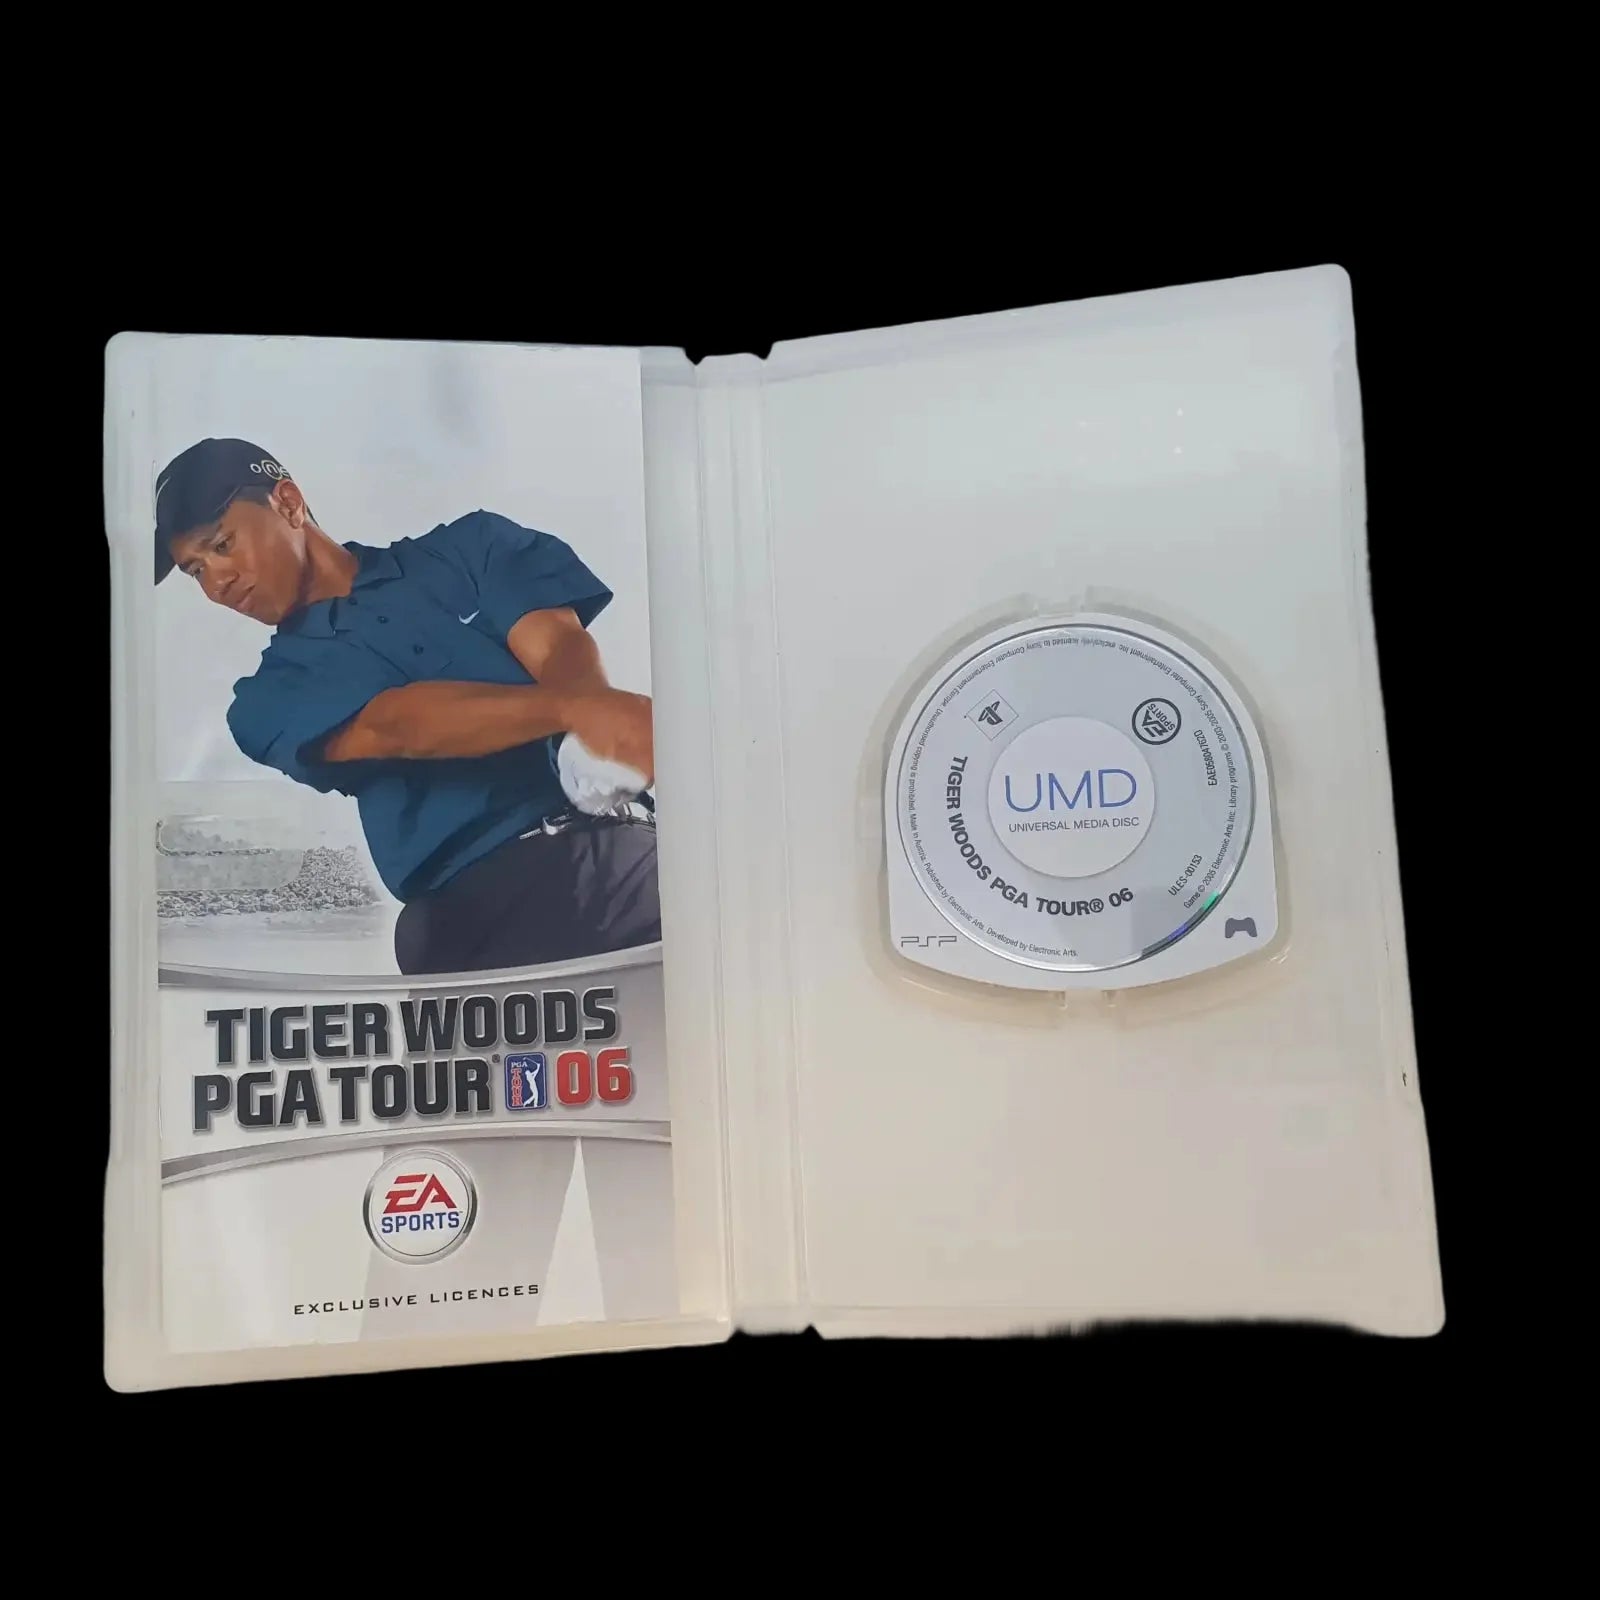 Tiger Woods Pga Tour Golf 06 Sony Playstation Portable Psp